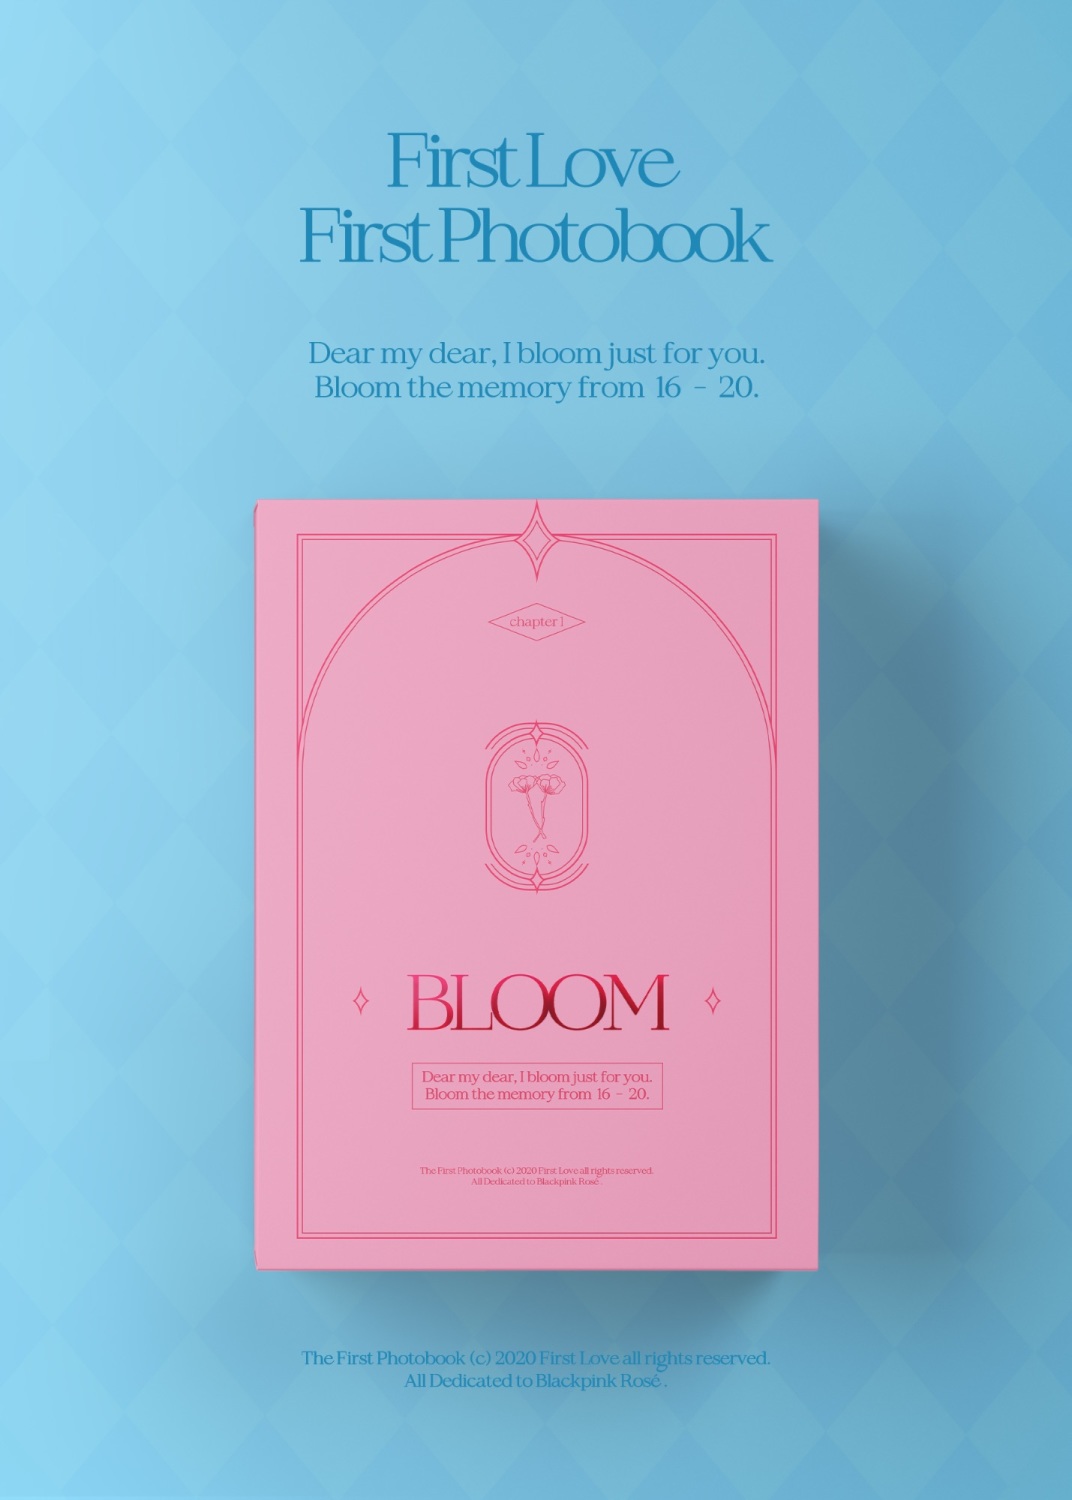 BLOOM - BLACKPINK ROSÉ PHOTO BOOK 